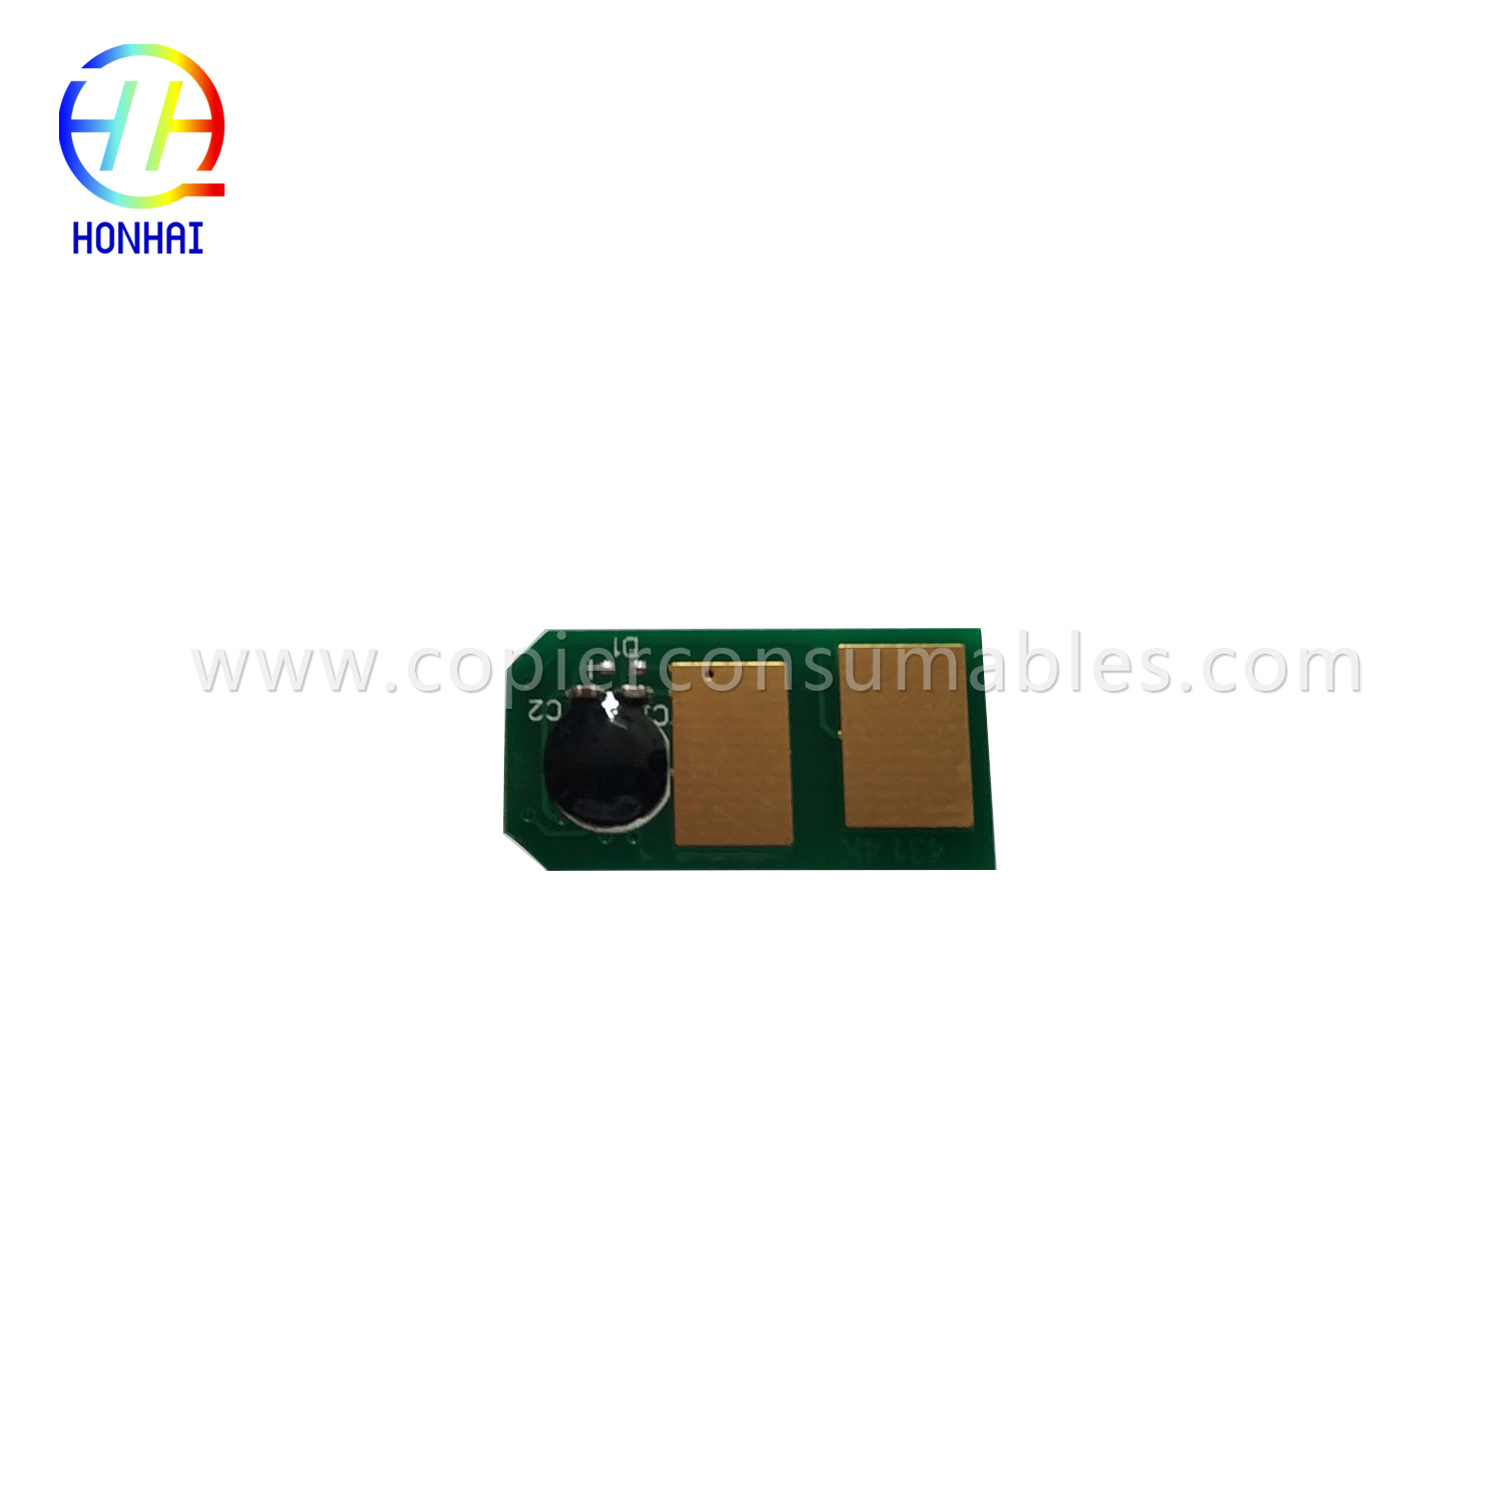 Toner Cartridge Chip for Oki B411 B431 MB461 MB471 MB491.jpg-1 拷贝